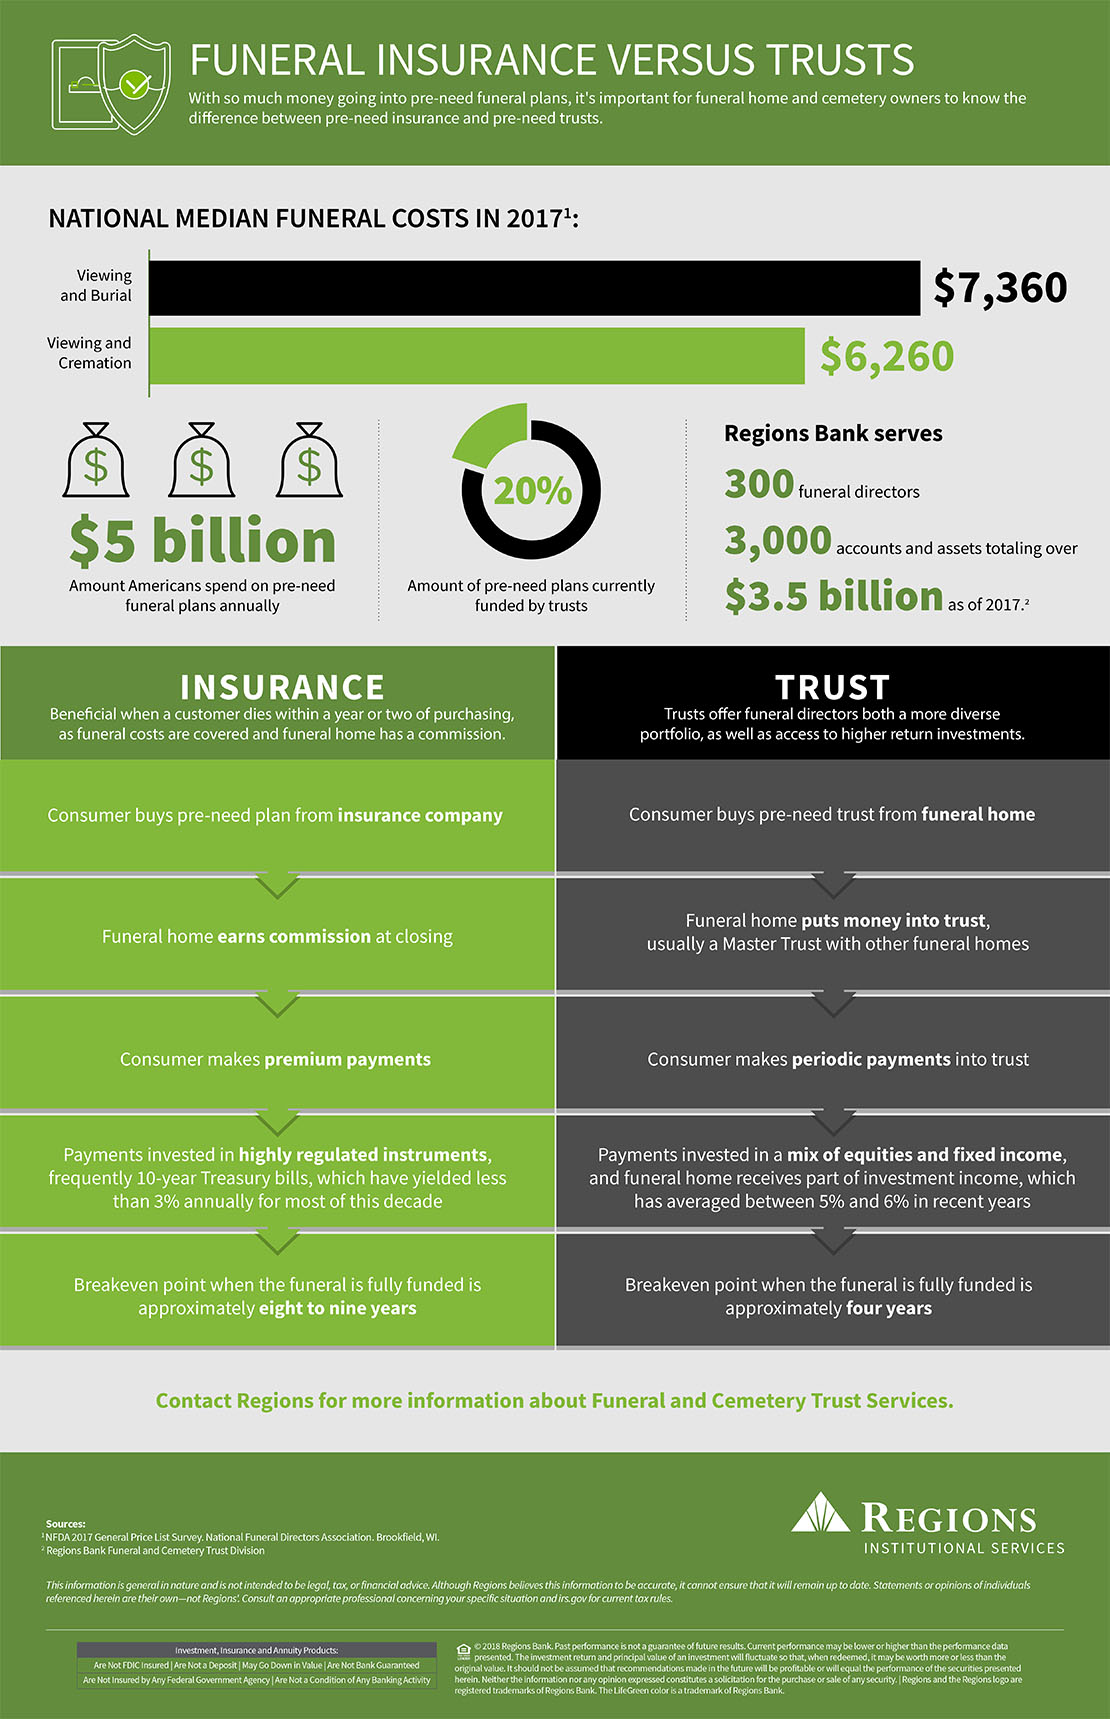 Funeral Insurance versus Trust infographic